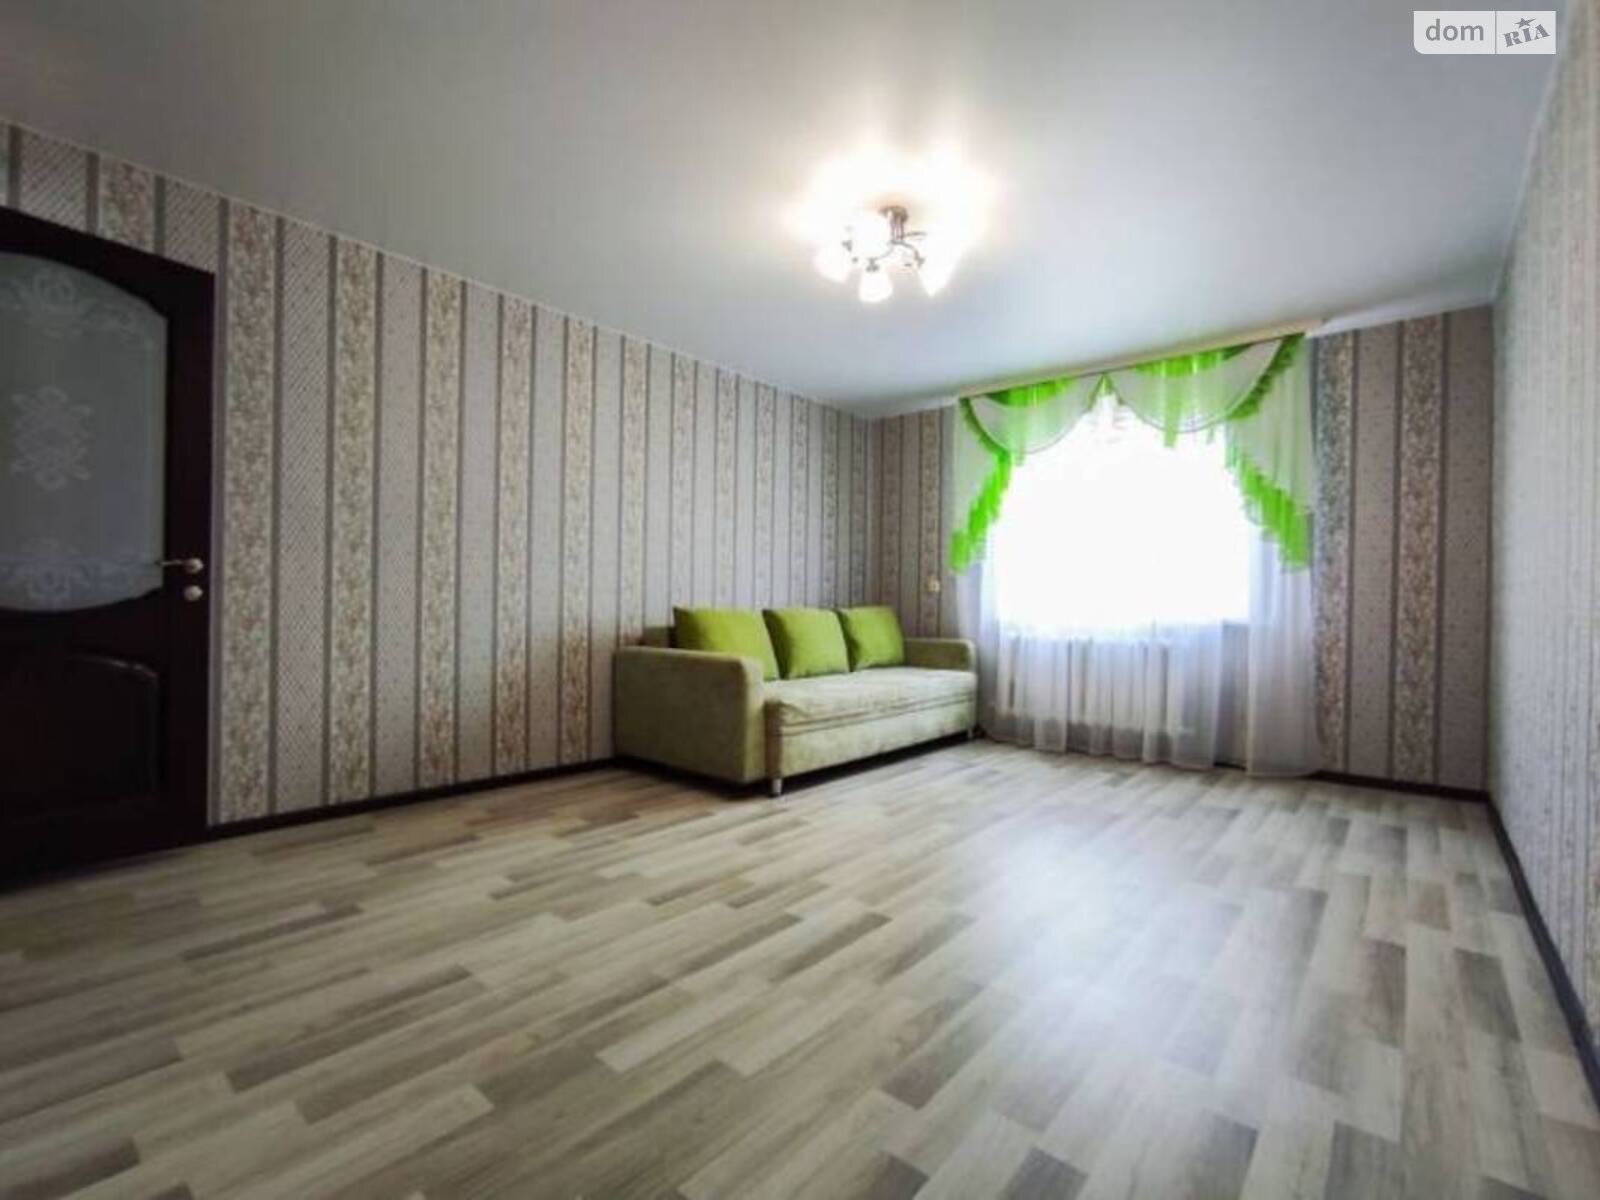 Продажа части дома в Днепре, Долинского, район Таромское, 7 комнат фото 1